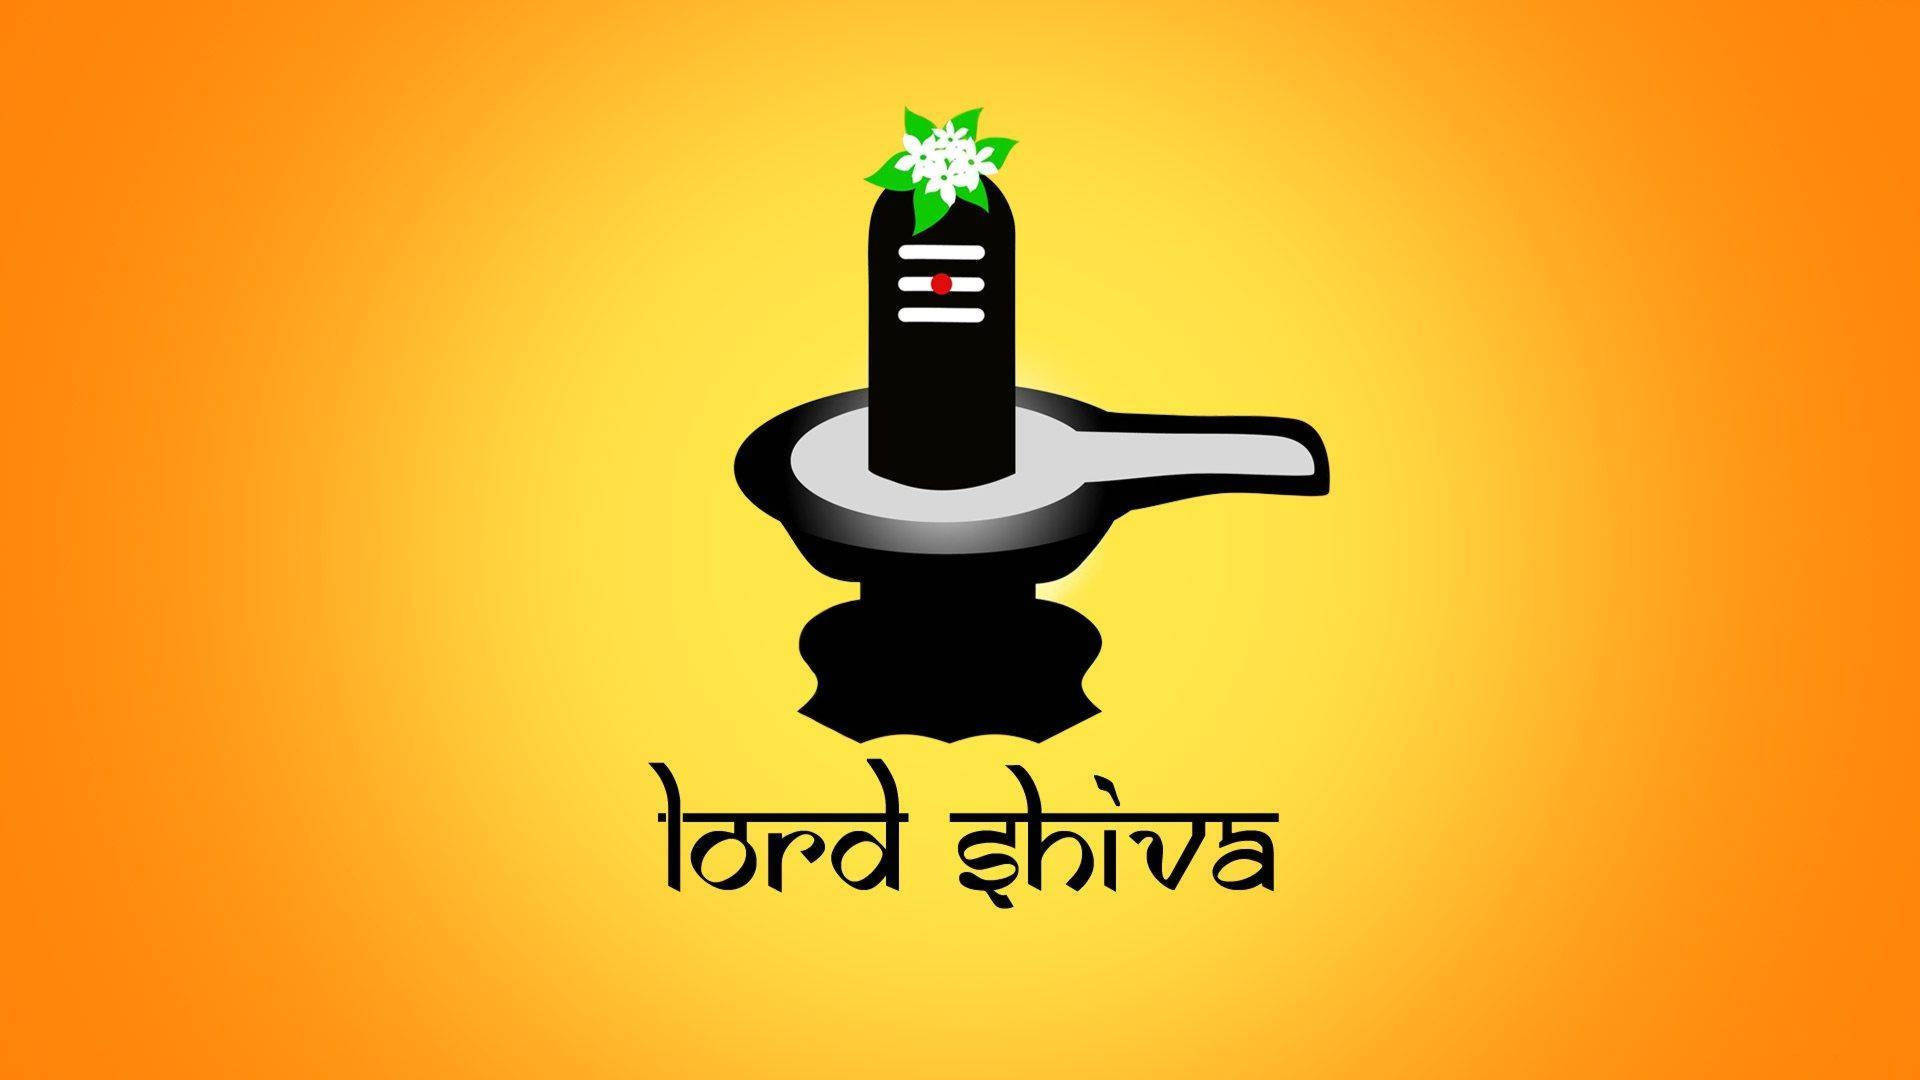 Premium Vector | Lord shiva logo illustration and trishul for maha  shivratri festival